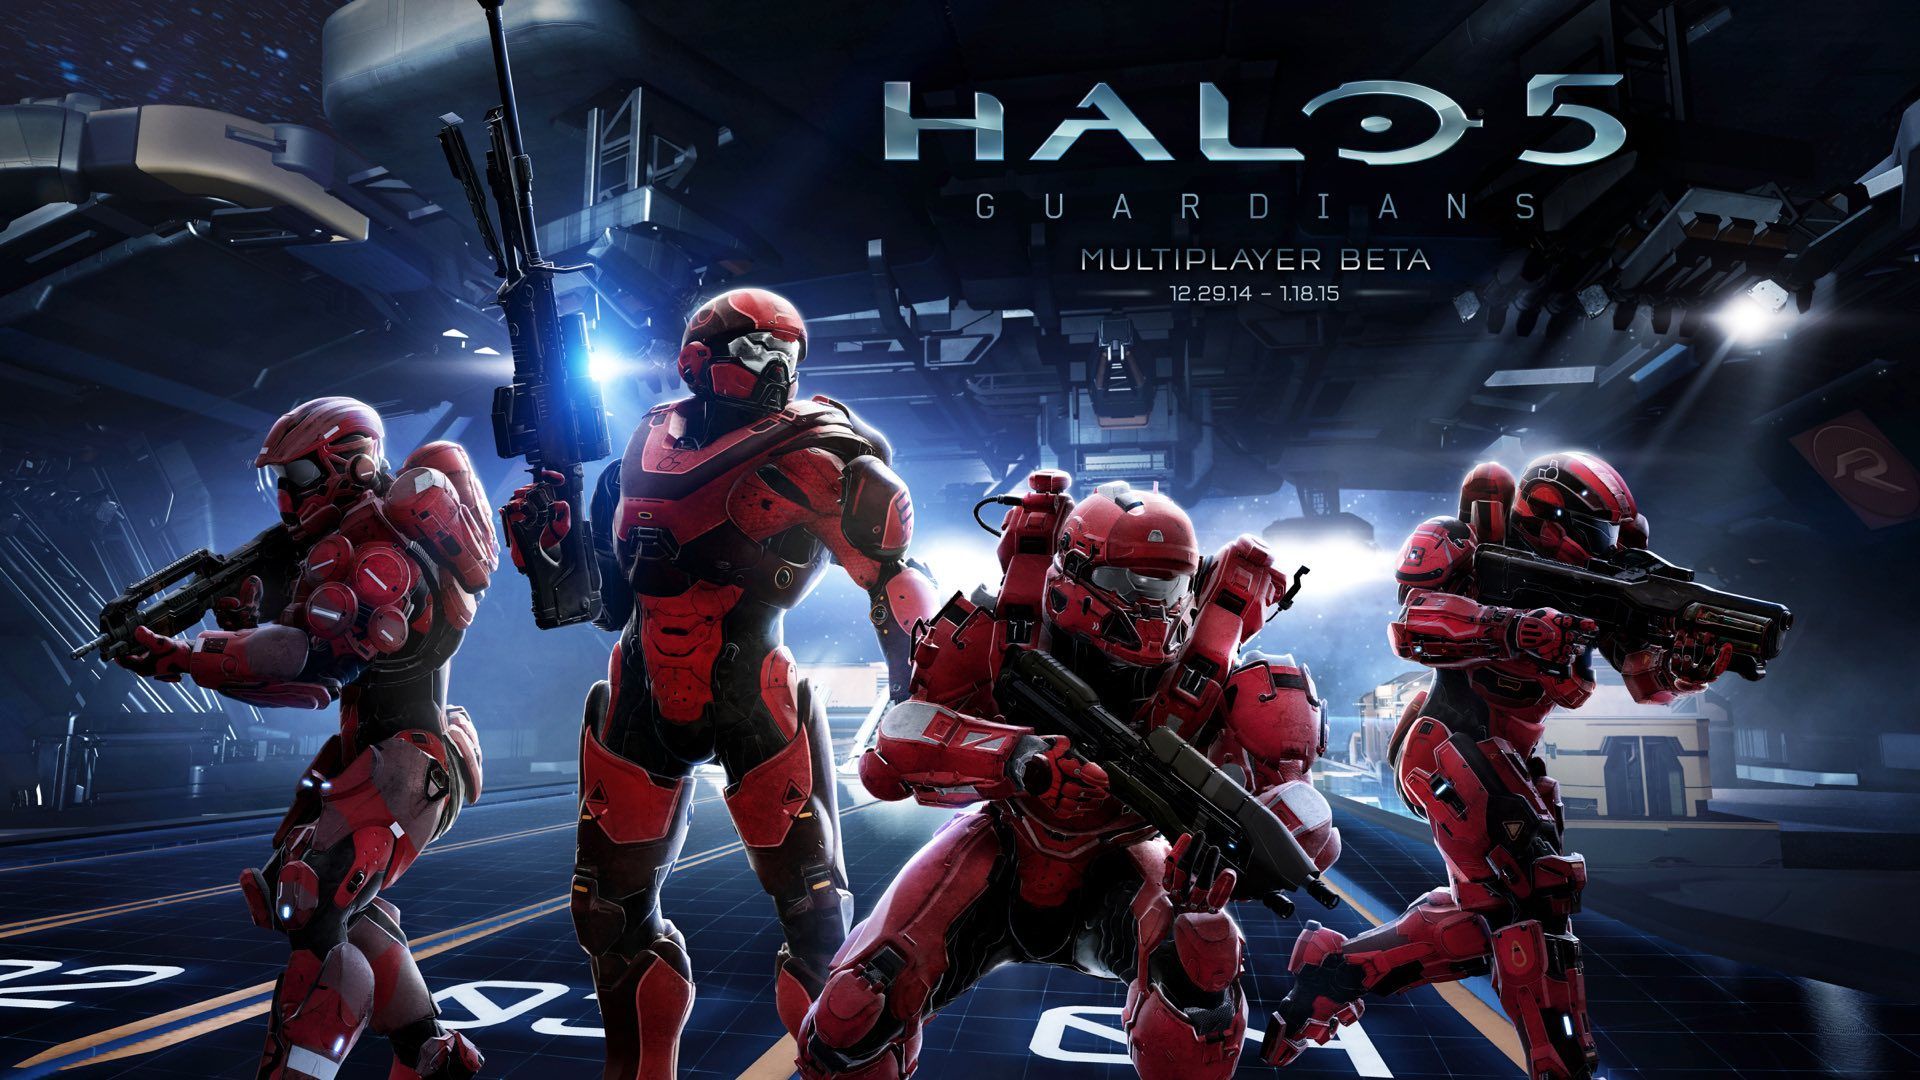 Halo 5 Guardians HD Wallpaper, Halo 5 Guardians Images | Cool ...